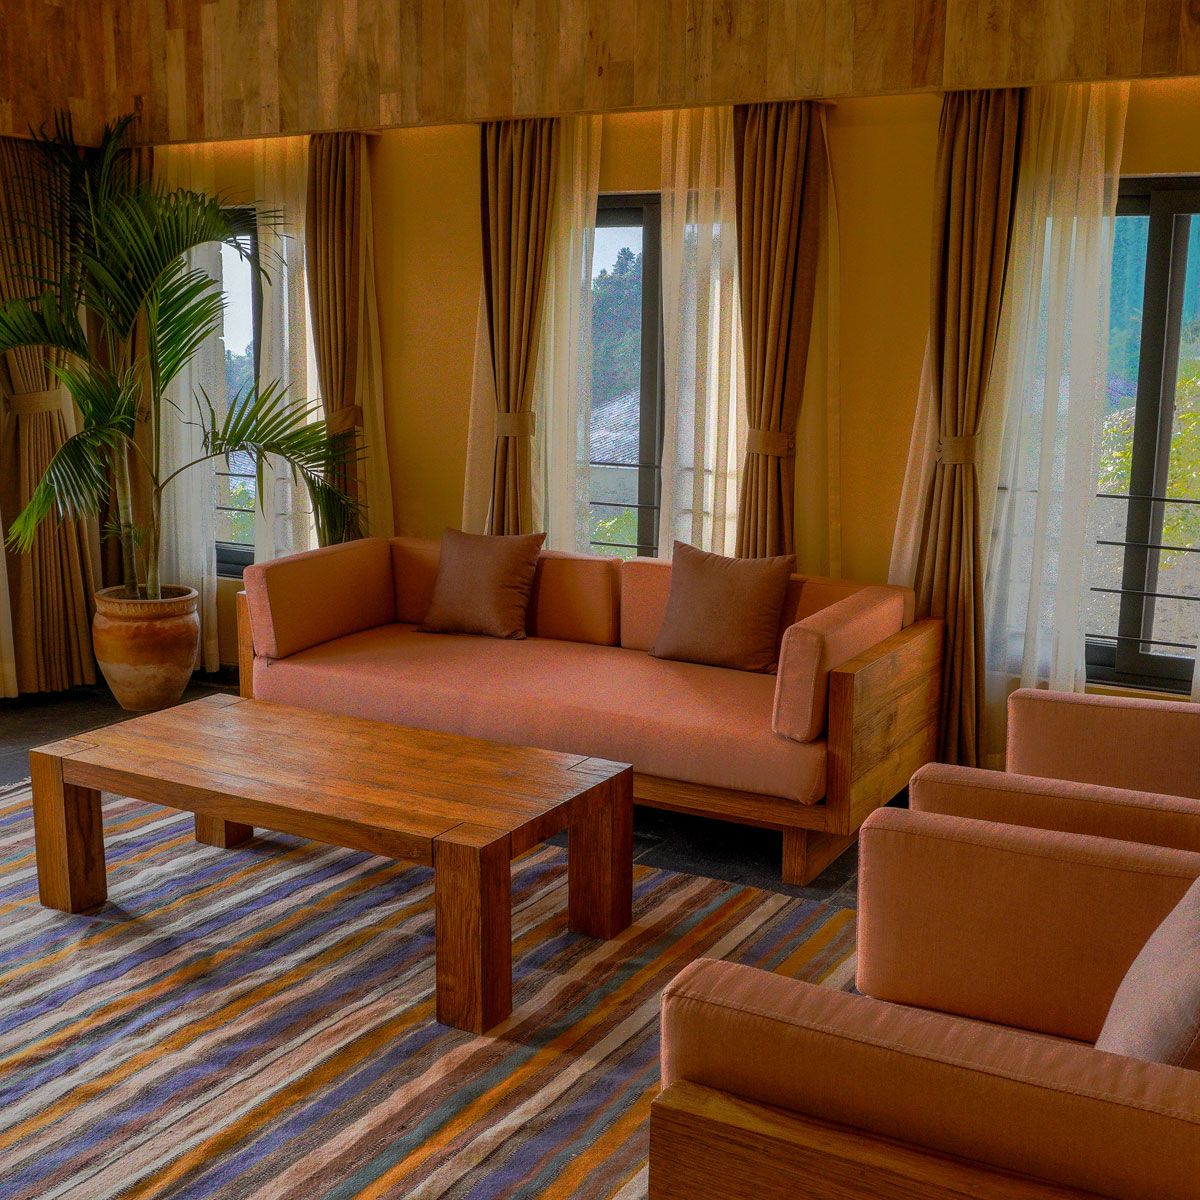 Junior suite at Dorje's Resort